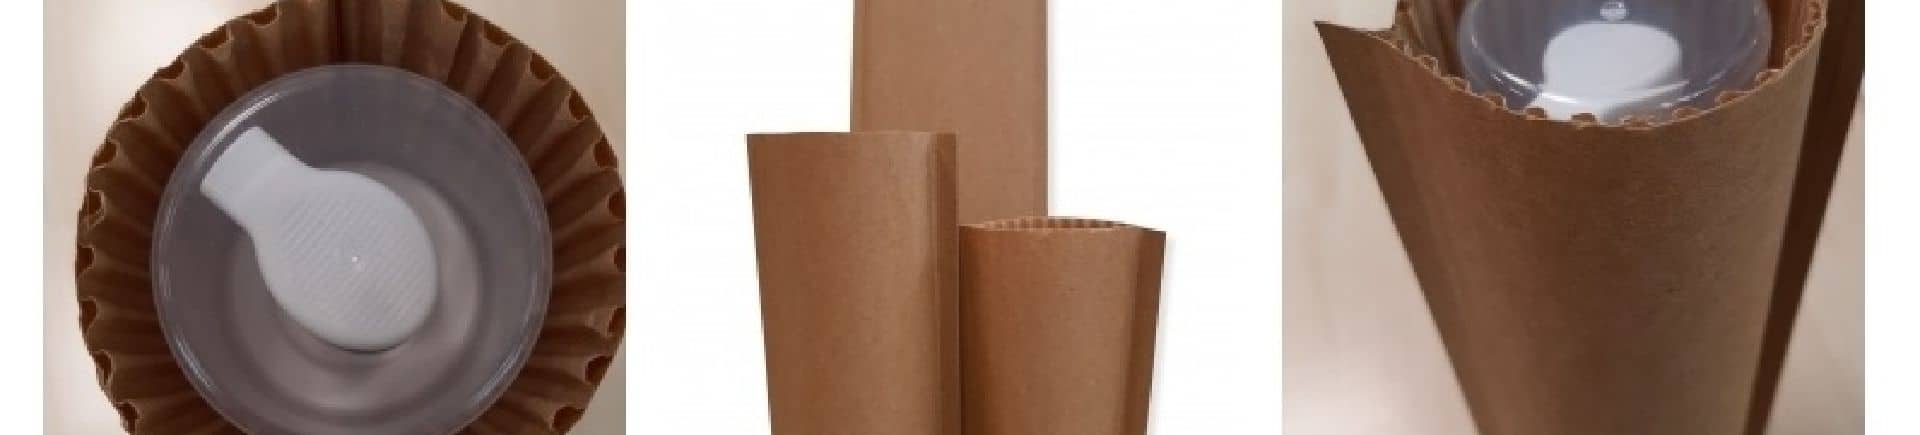 Eco-Envelopes by Botta Packaging